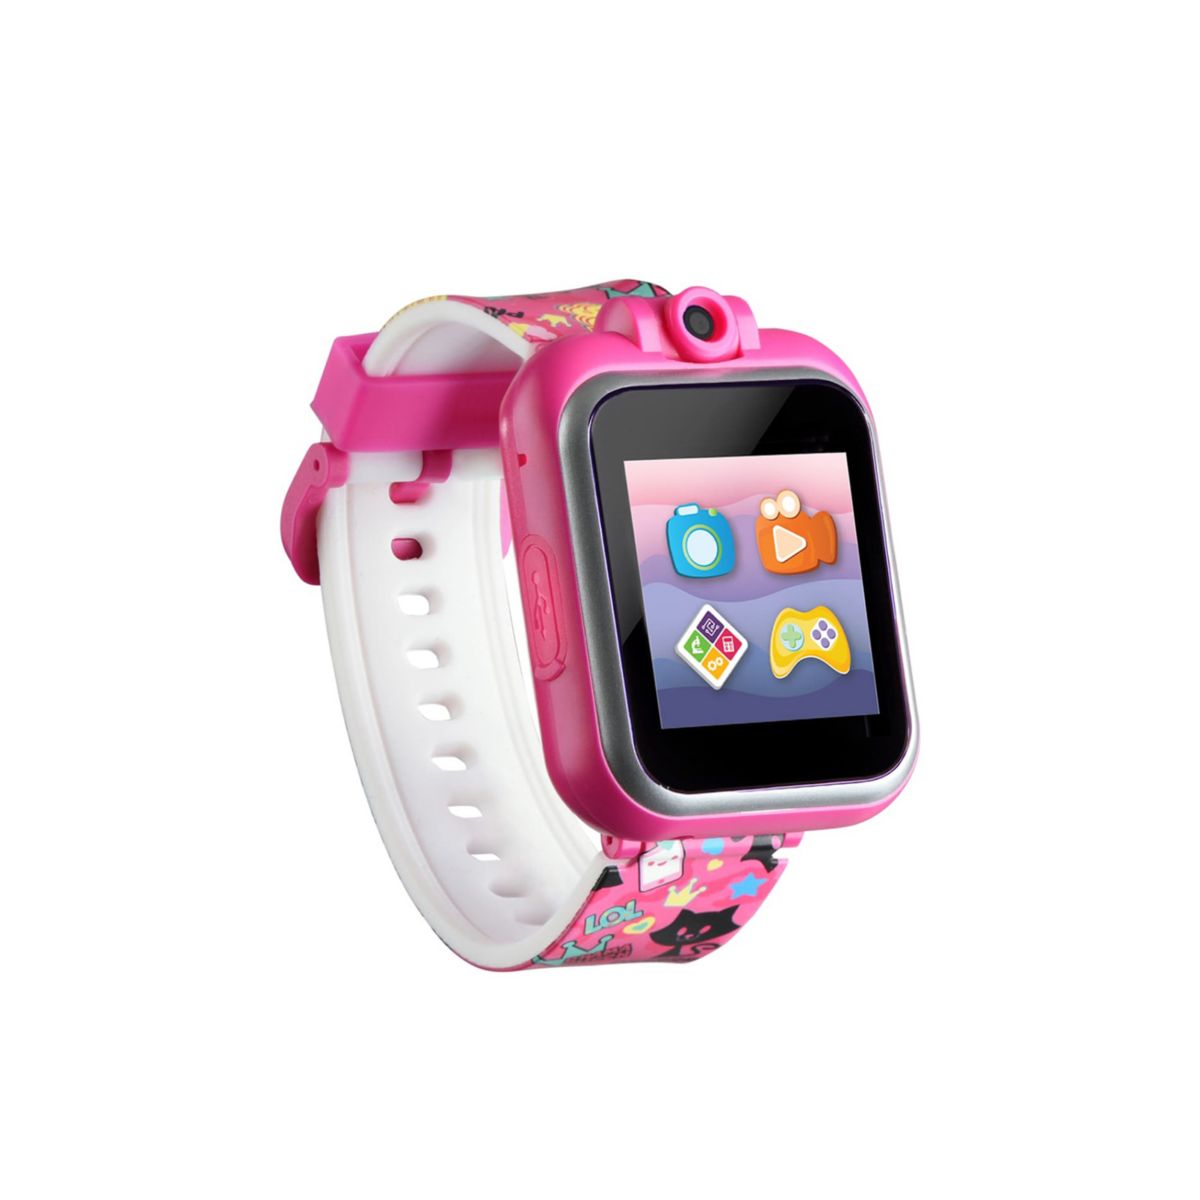 Смарт-часы iTouch PlayZoom 2 для детей цвета фуксии с котиками и принтом Playzoom